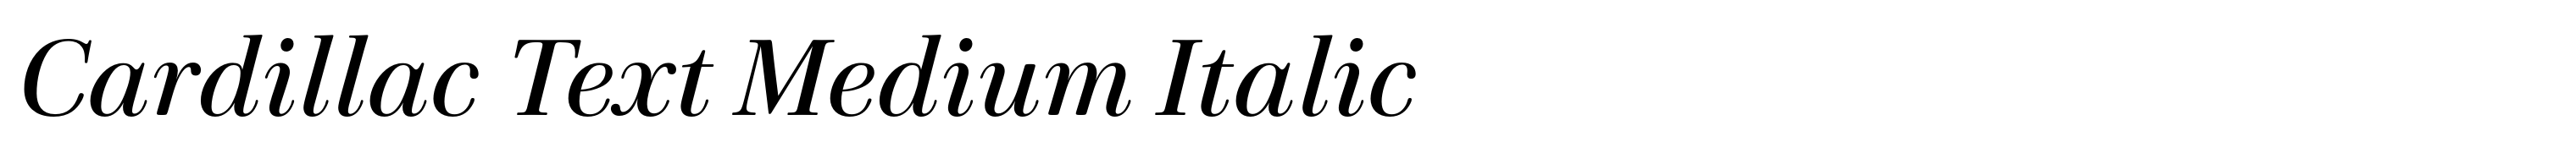 Cardillac Text Medium Italic